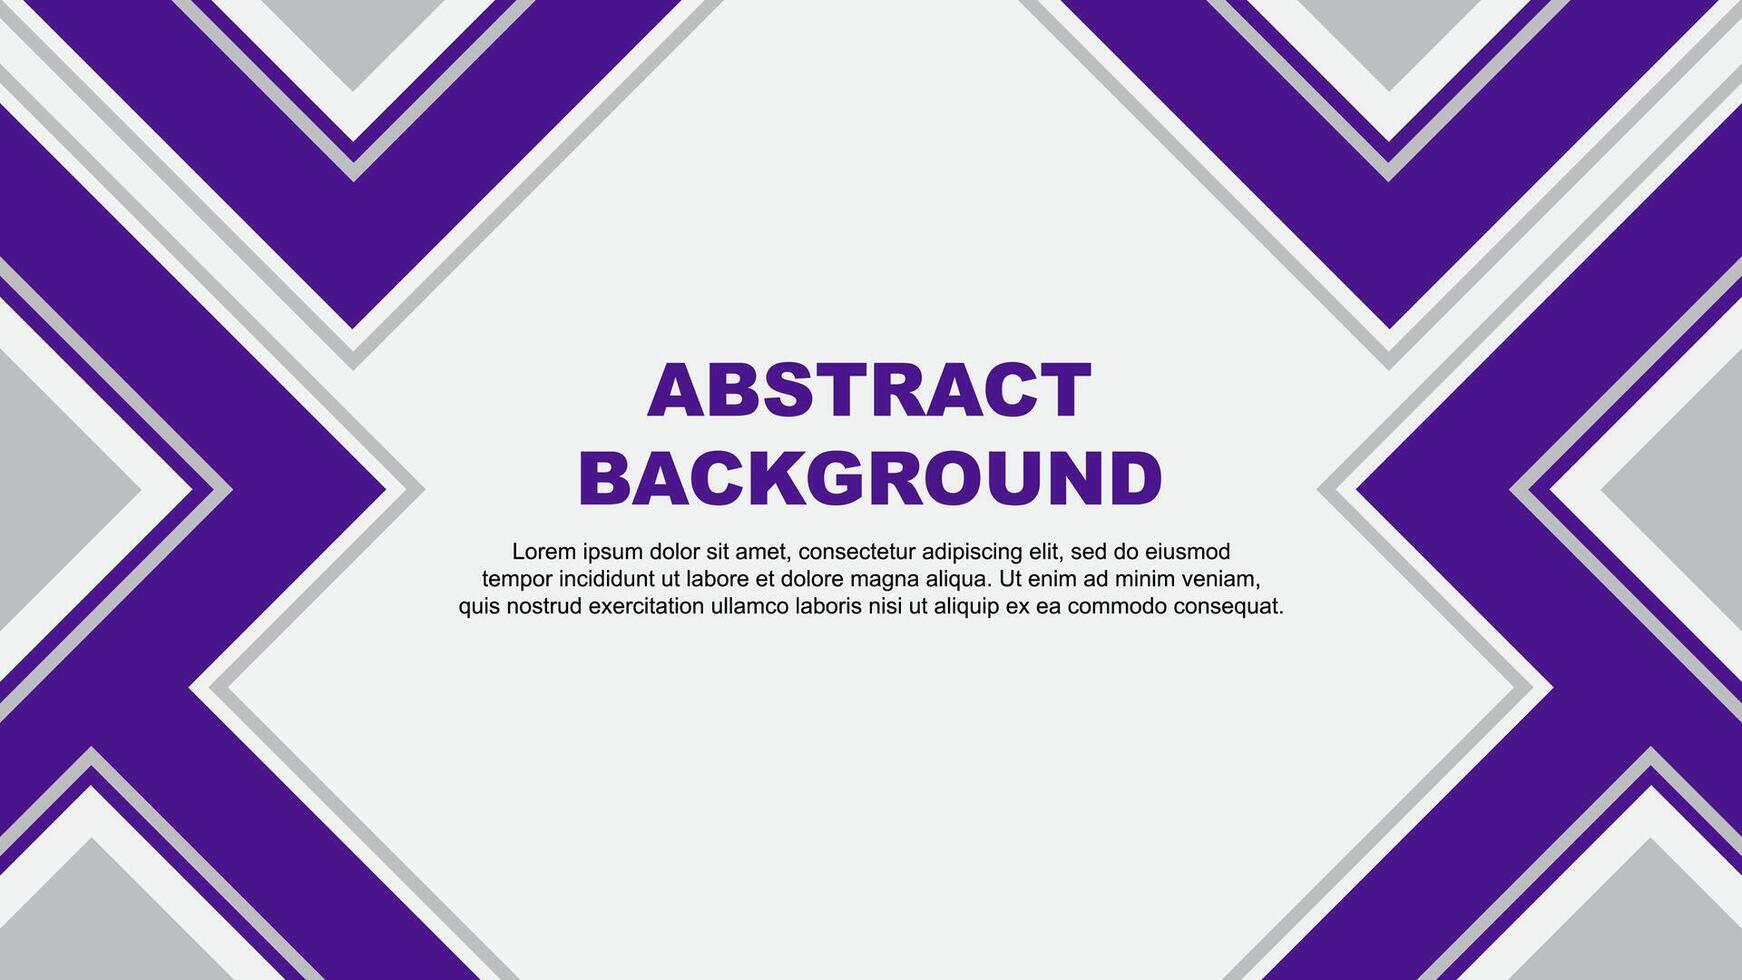 Abstract Purple Background Design Template. Banner Wallpaper Vector Illustration. Purple Vector